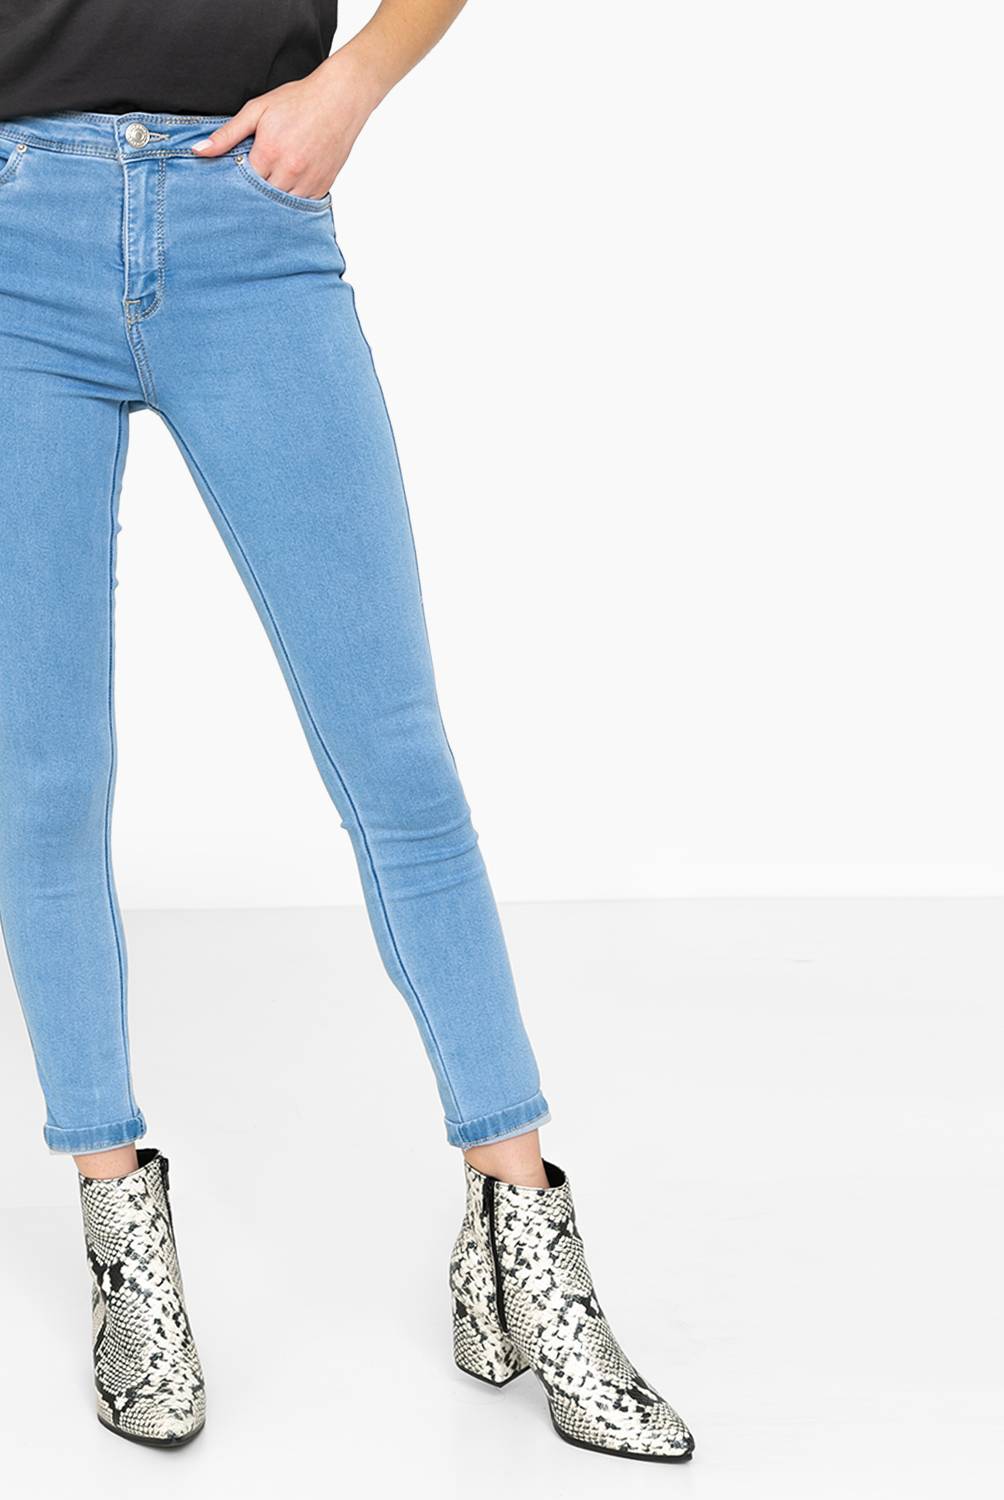 AMERICANINO - Americanino Jeans Skinny Tiro Alto Mujer